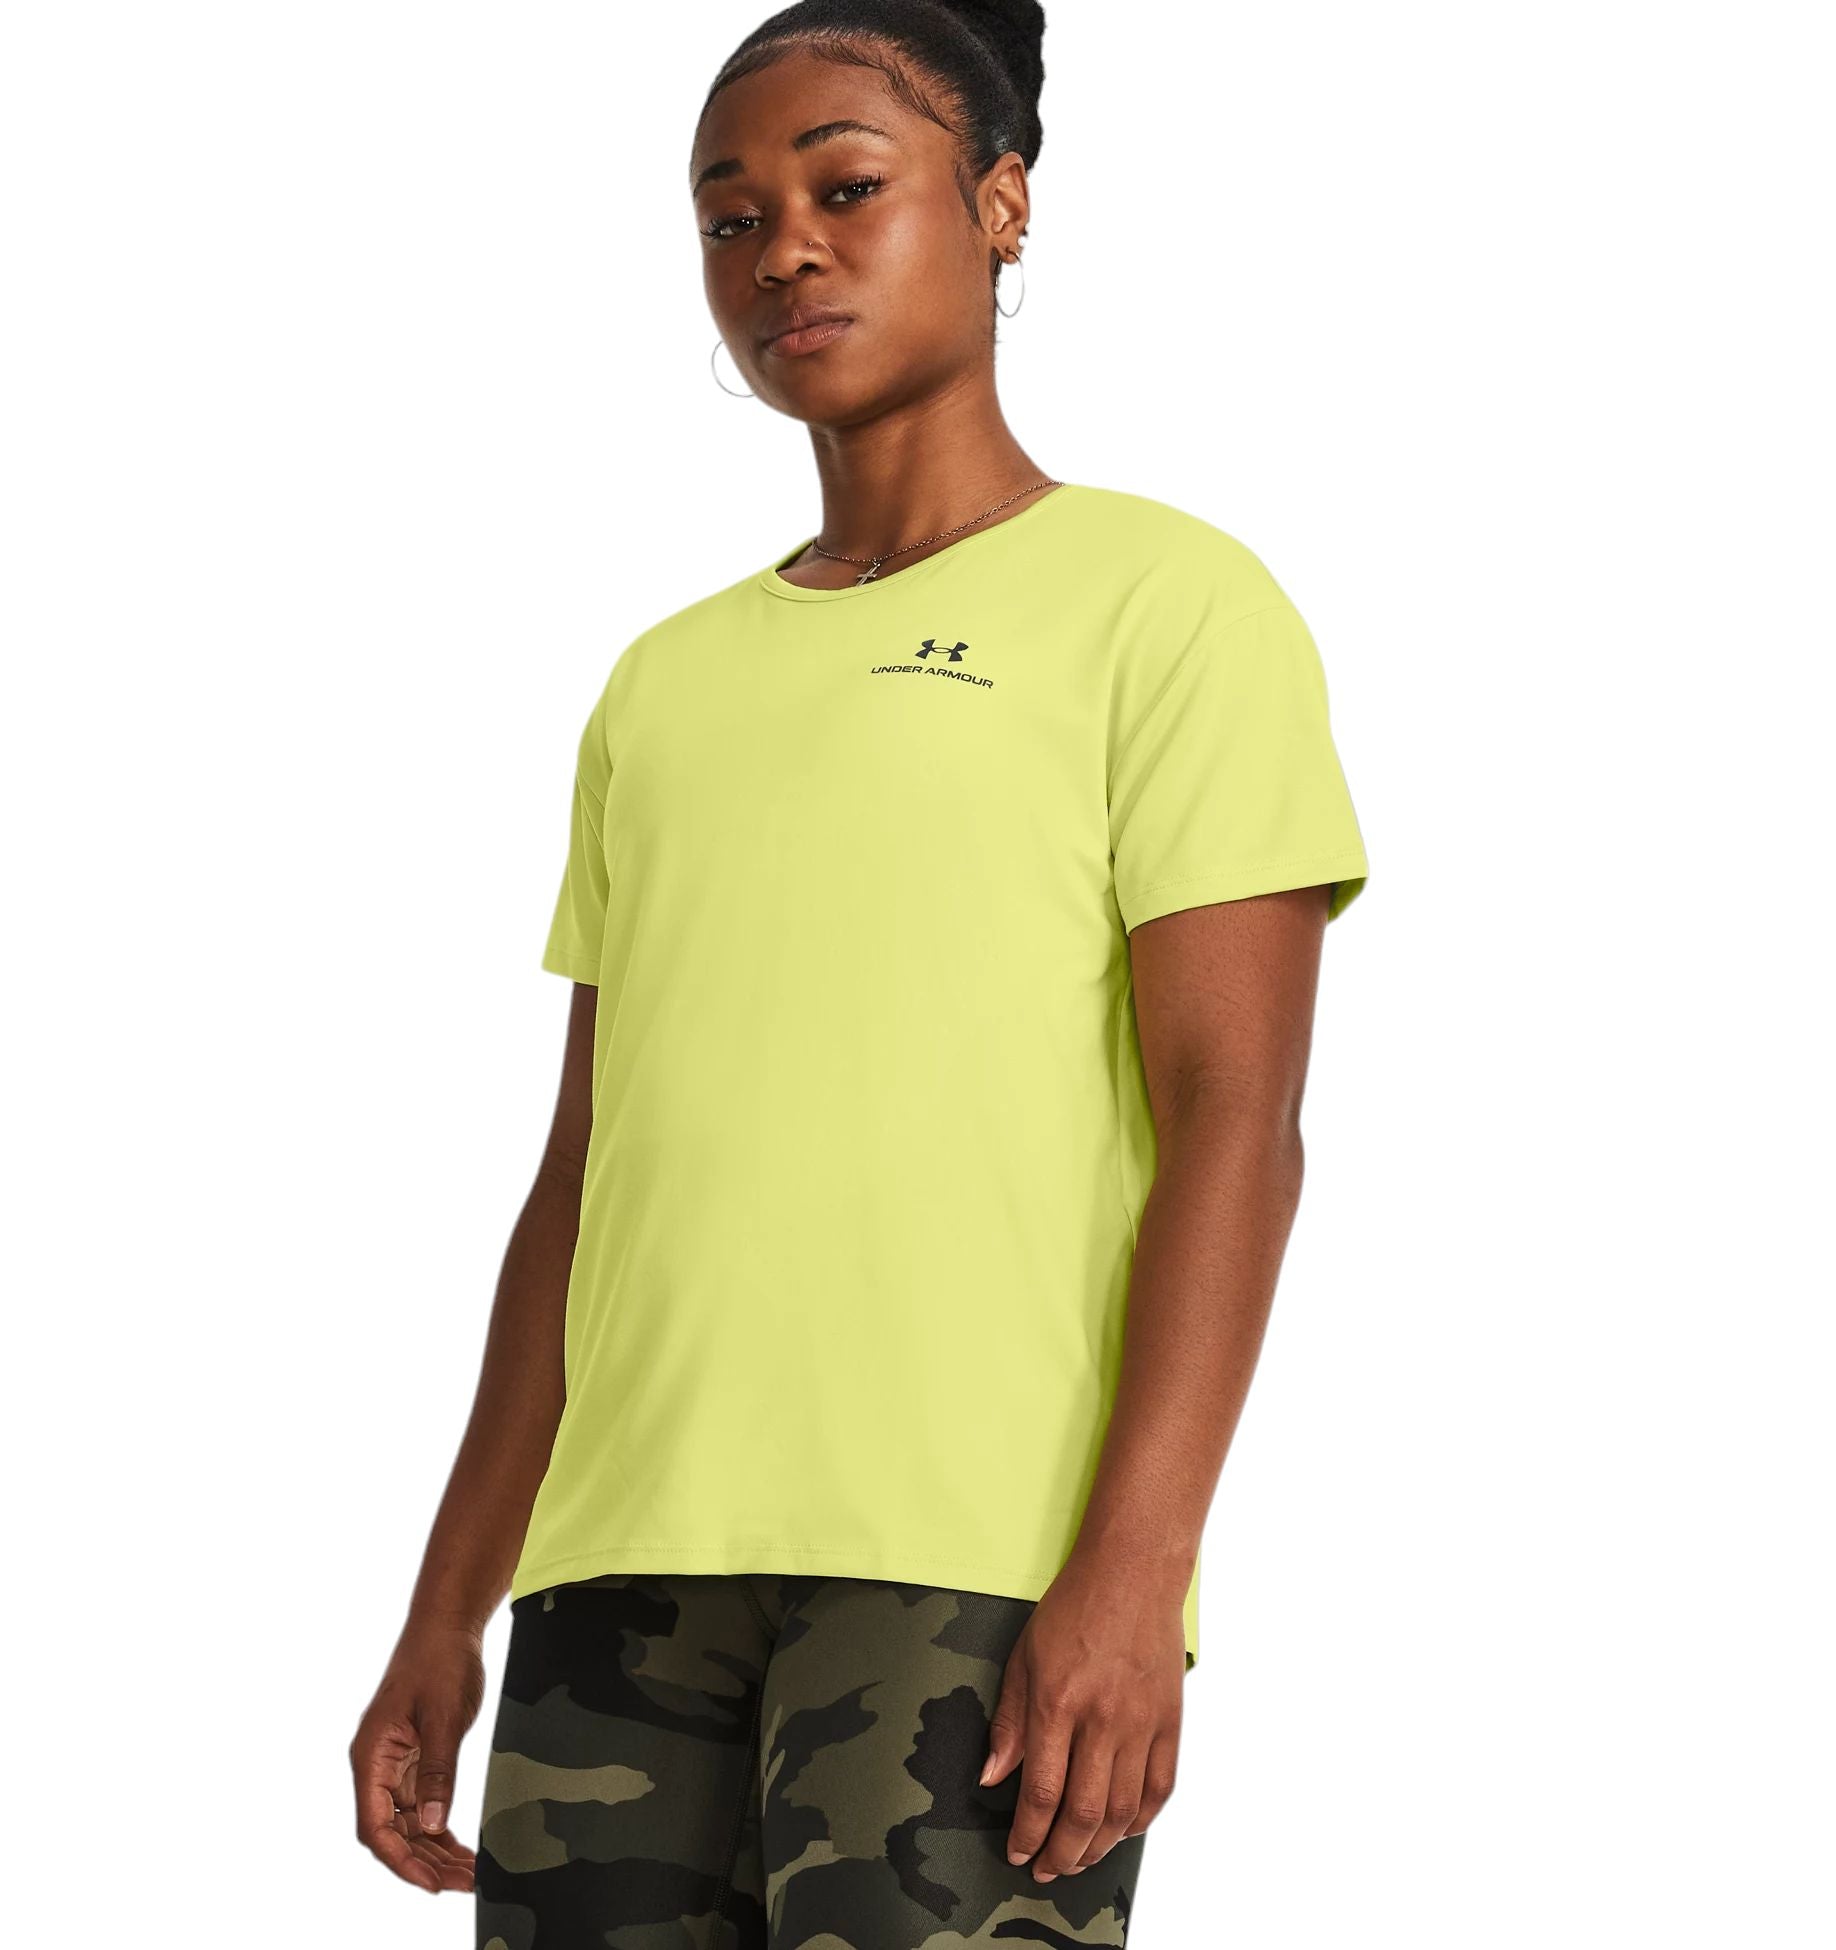 Women's Rush Energy 2.0 T-shirt Lime Yellow/Black 